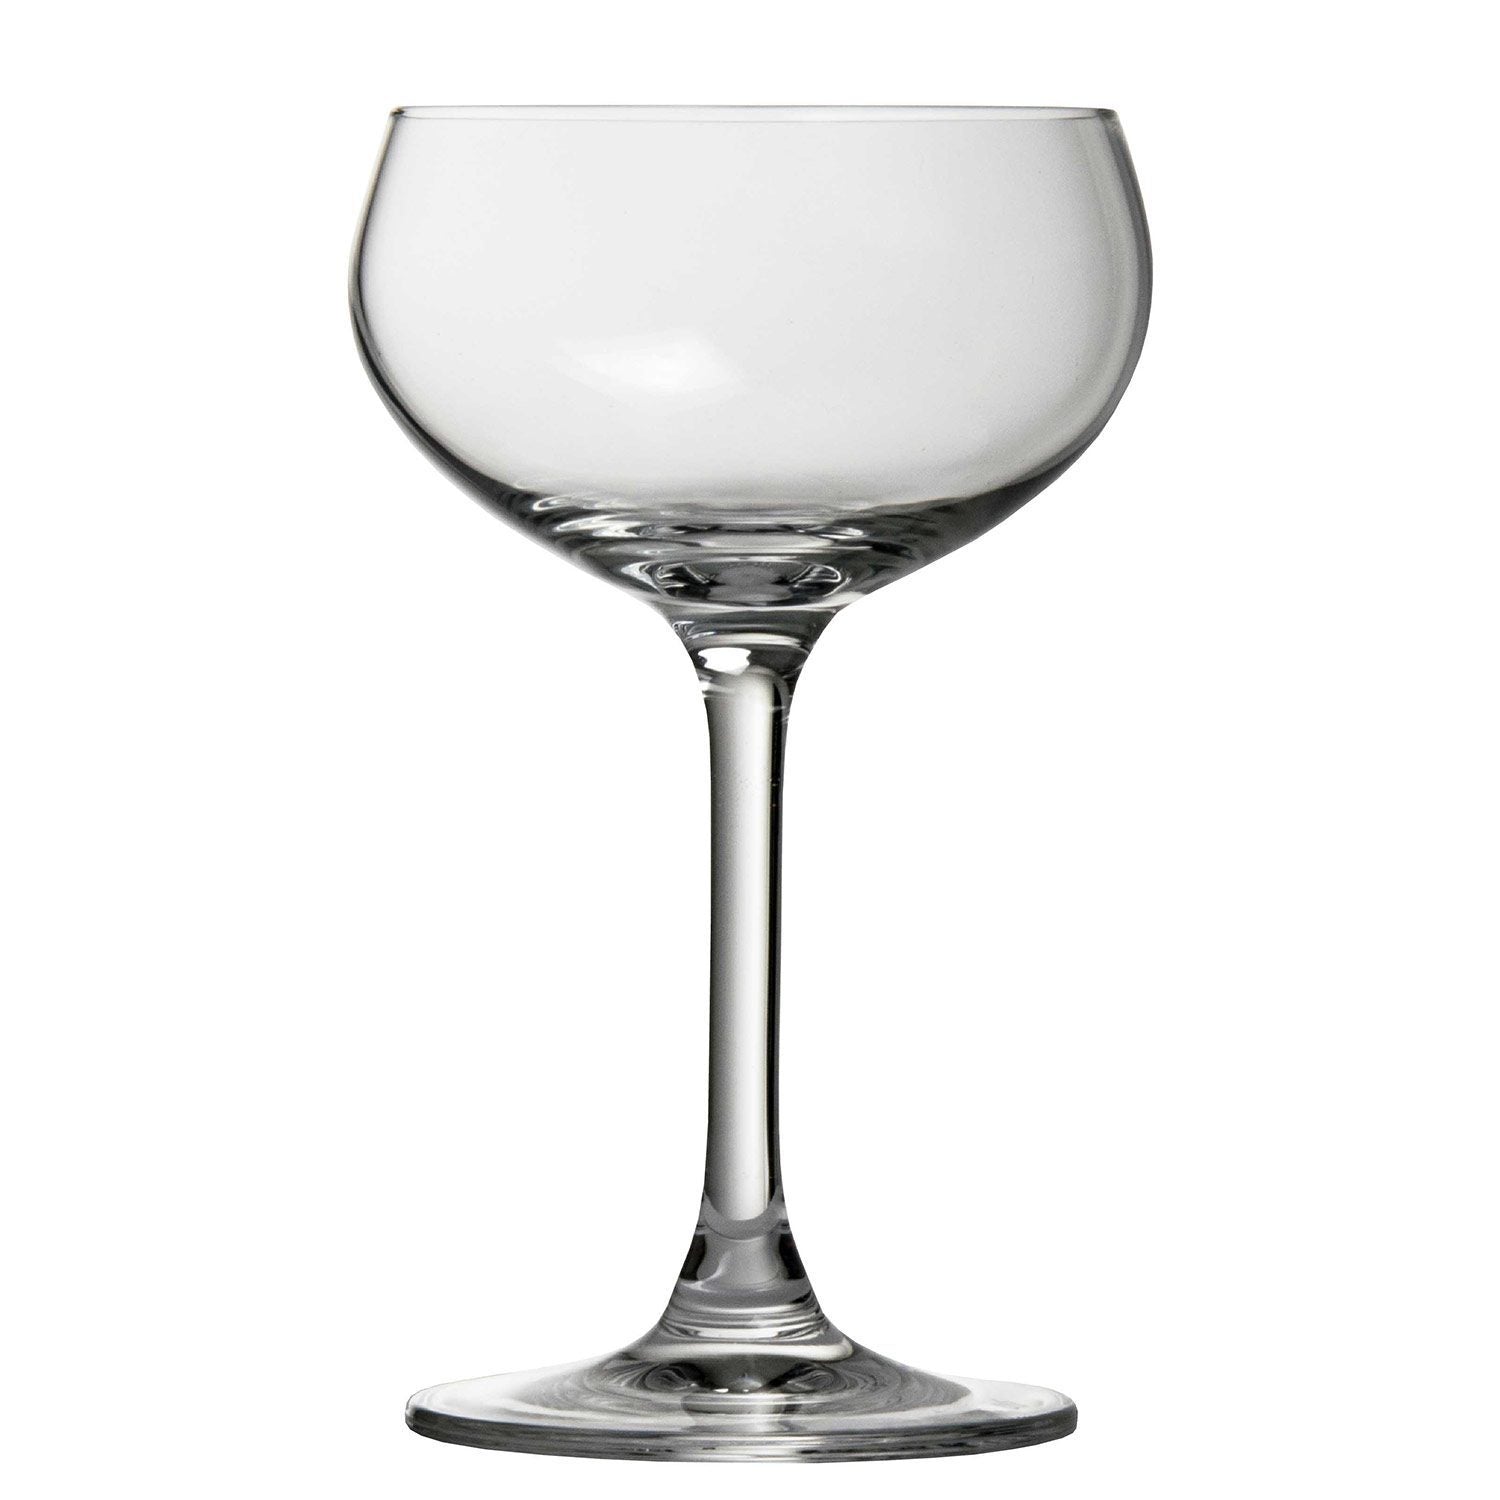 Crystal 5 oz Retro Nick and Nora Coupe Glasses | Set of 6 | Vintage Bar  Glassware for Martini, Manha…See more Crystal 5 oz Retro Nick and Nora  Coupe